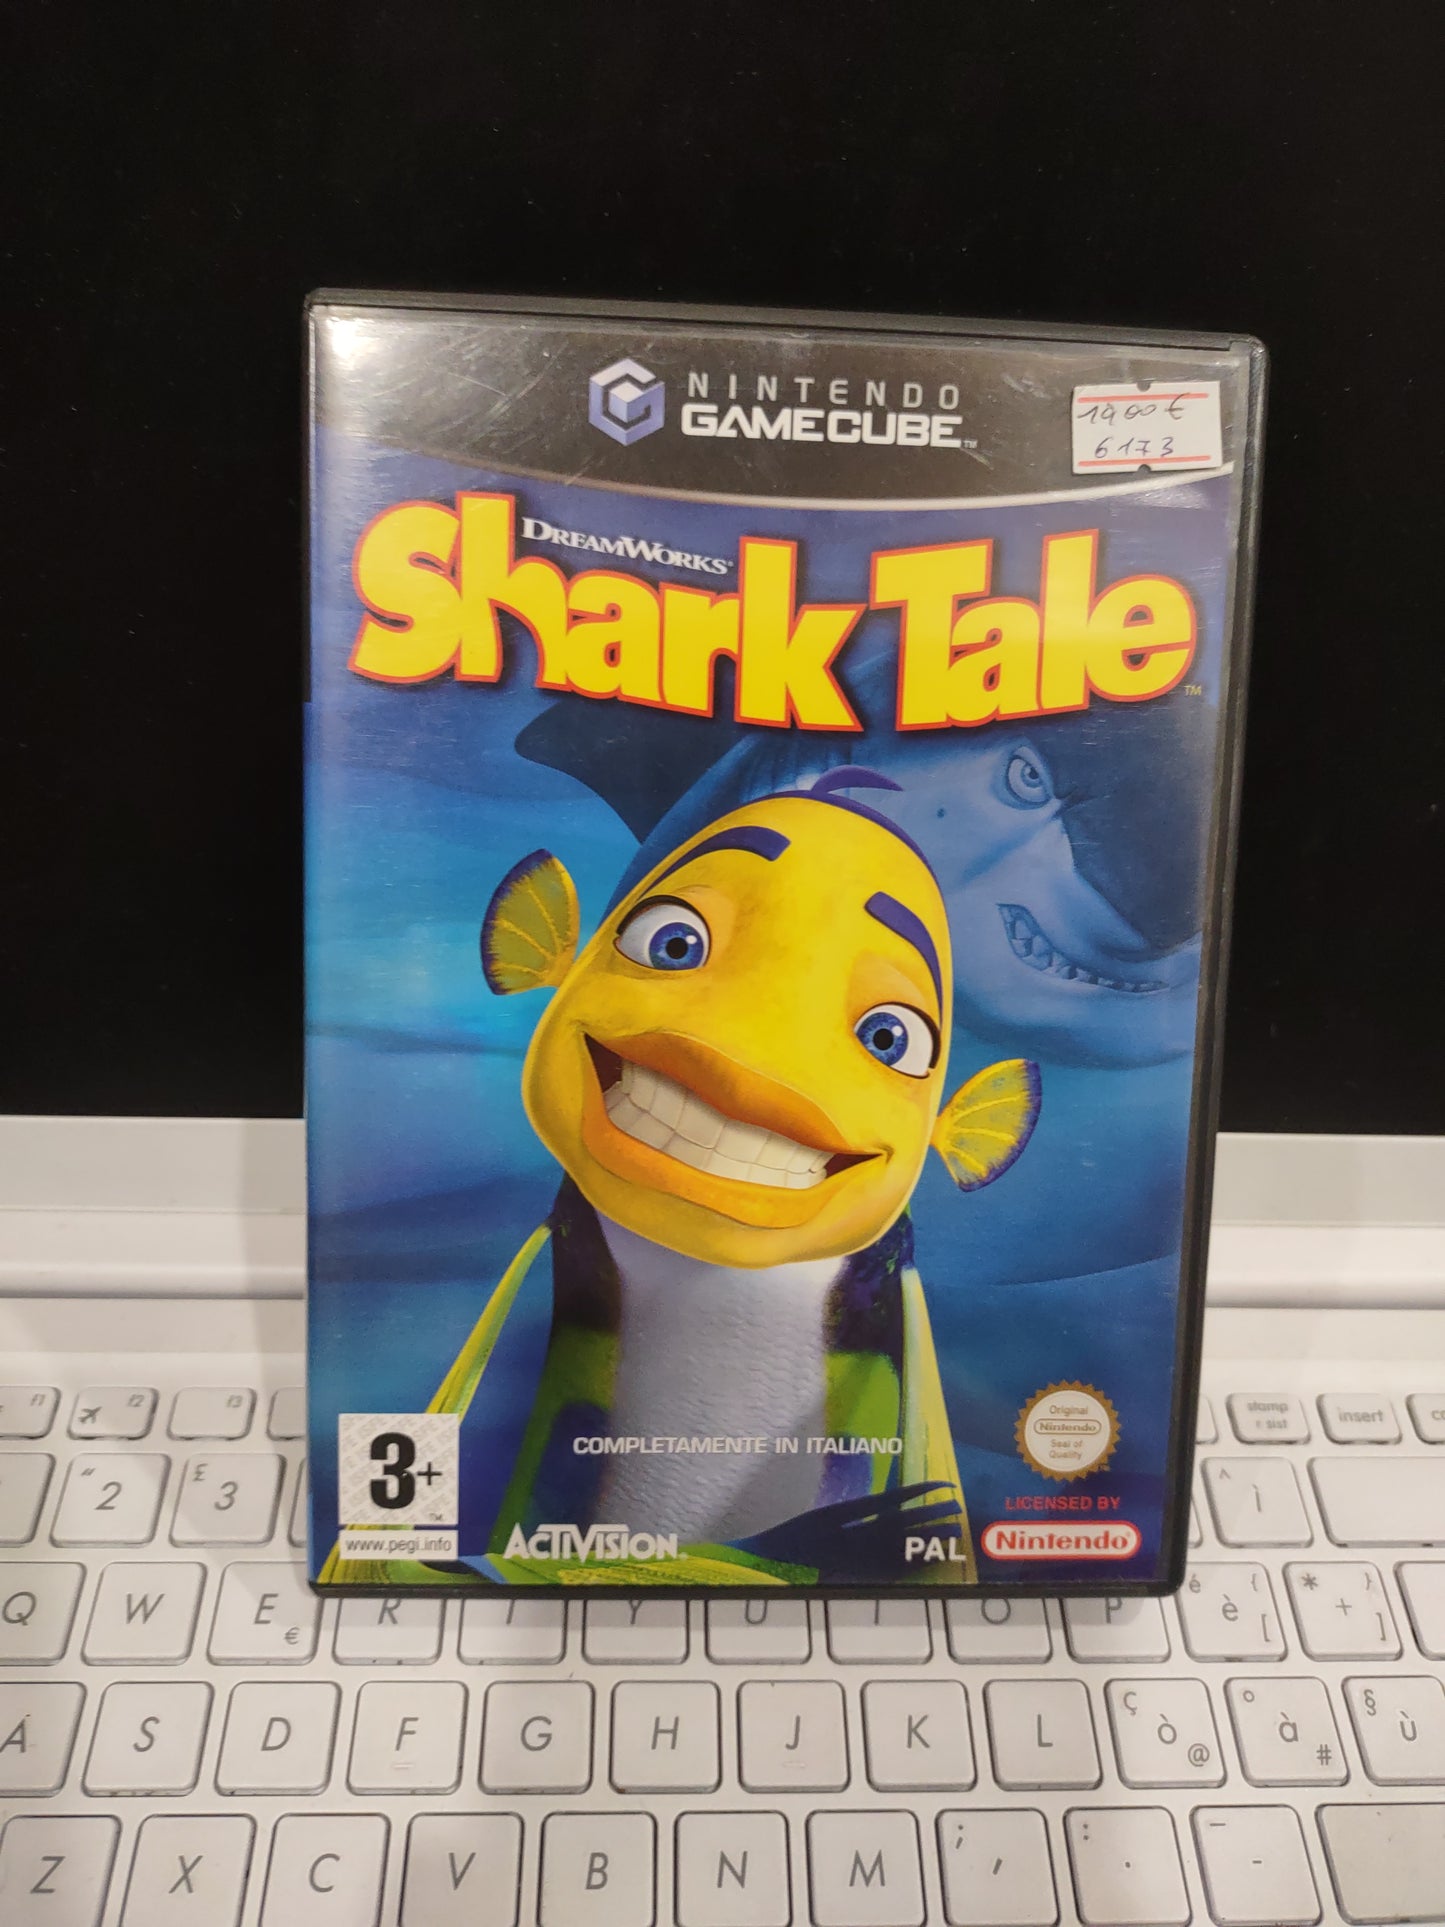 Gioco Nintendo GameCube Dreamworks Shark tale Activision